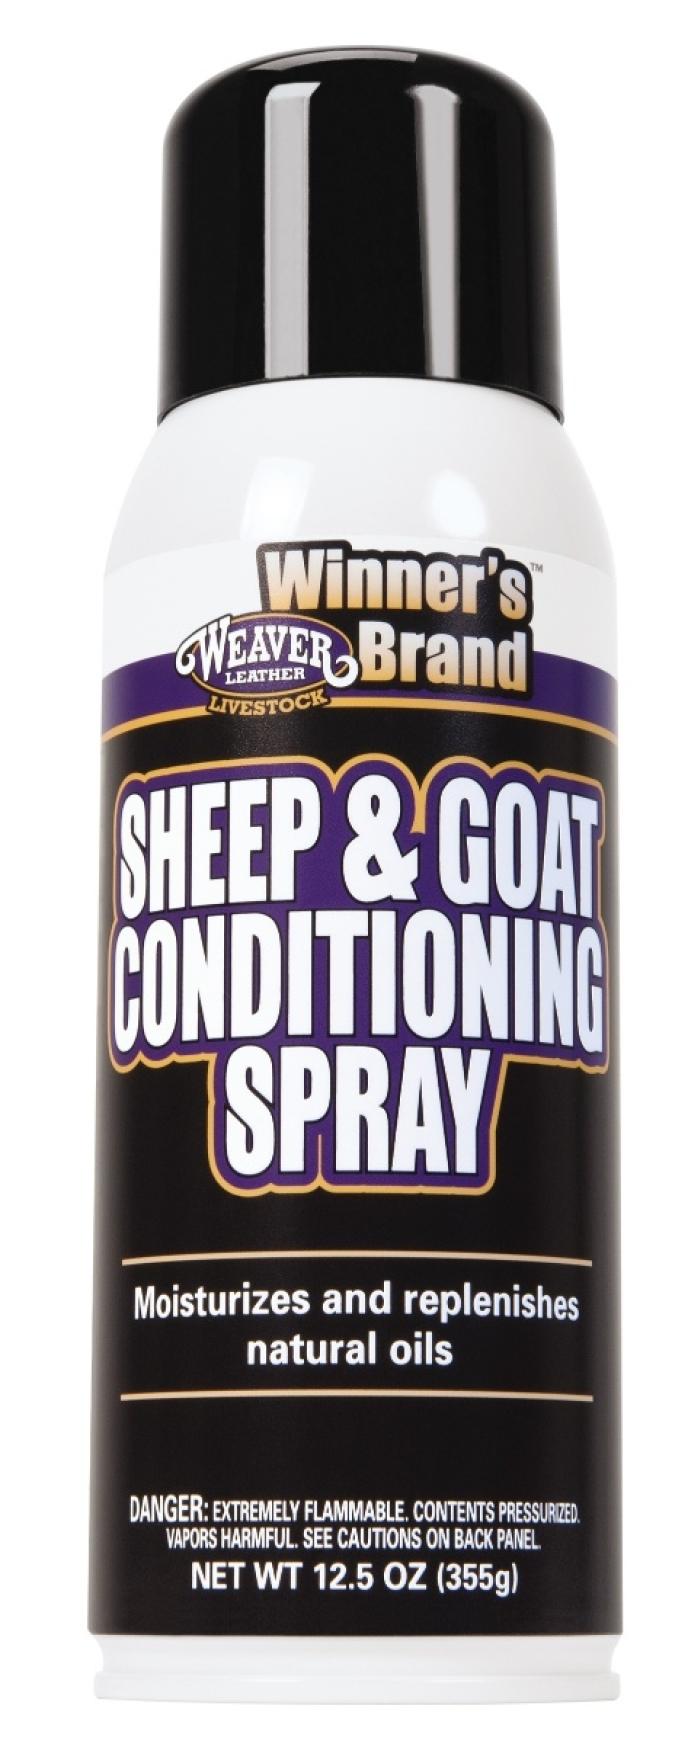 Weaver Sheep & Goat Conditioning Spray